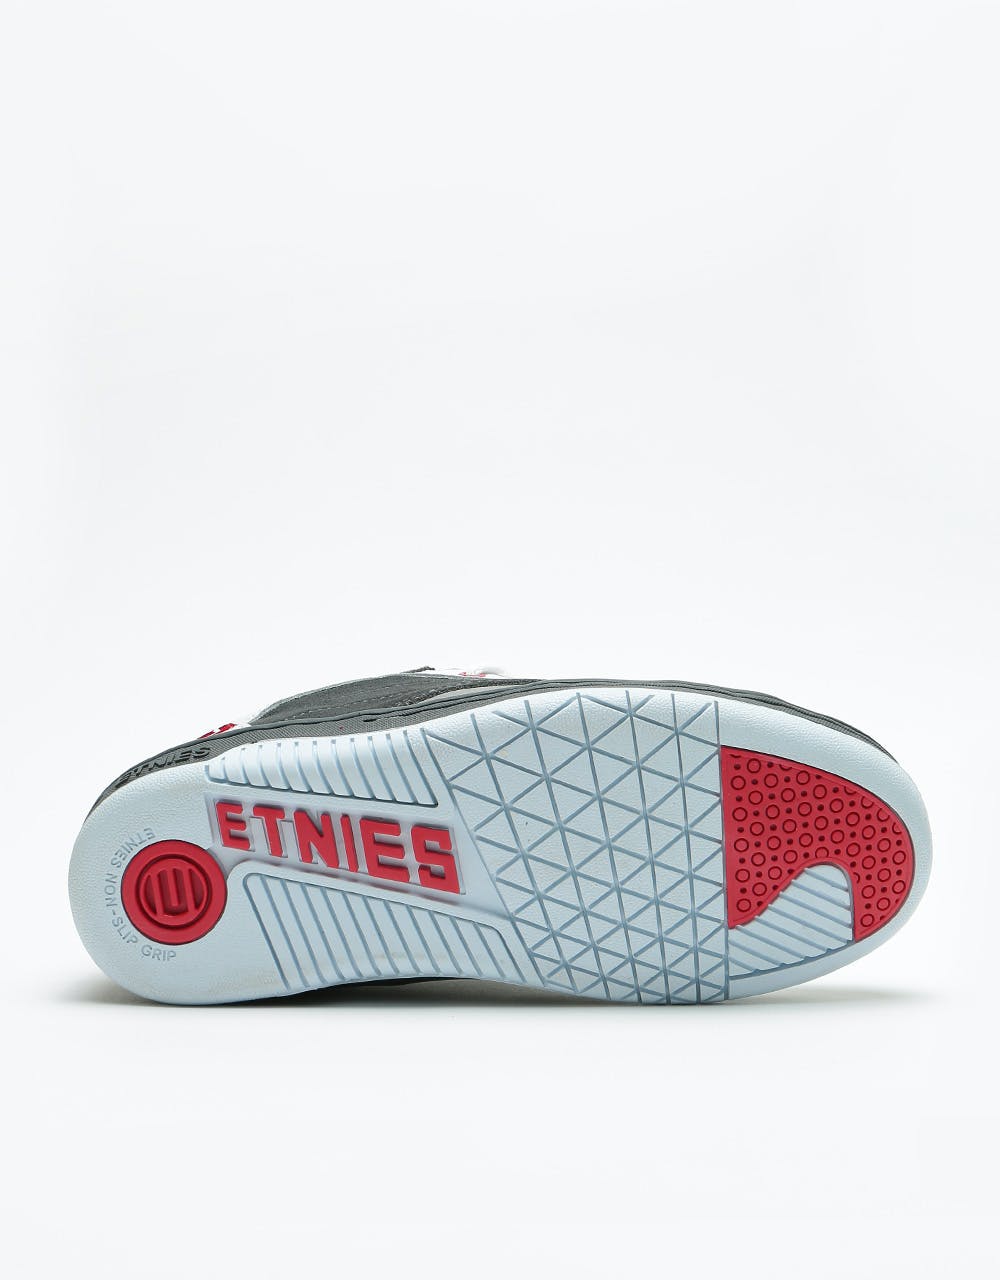 Etnies Czar Skate Shoes - Grey/White/Red